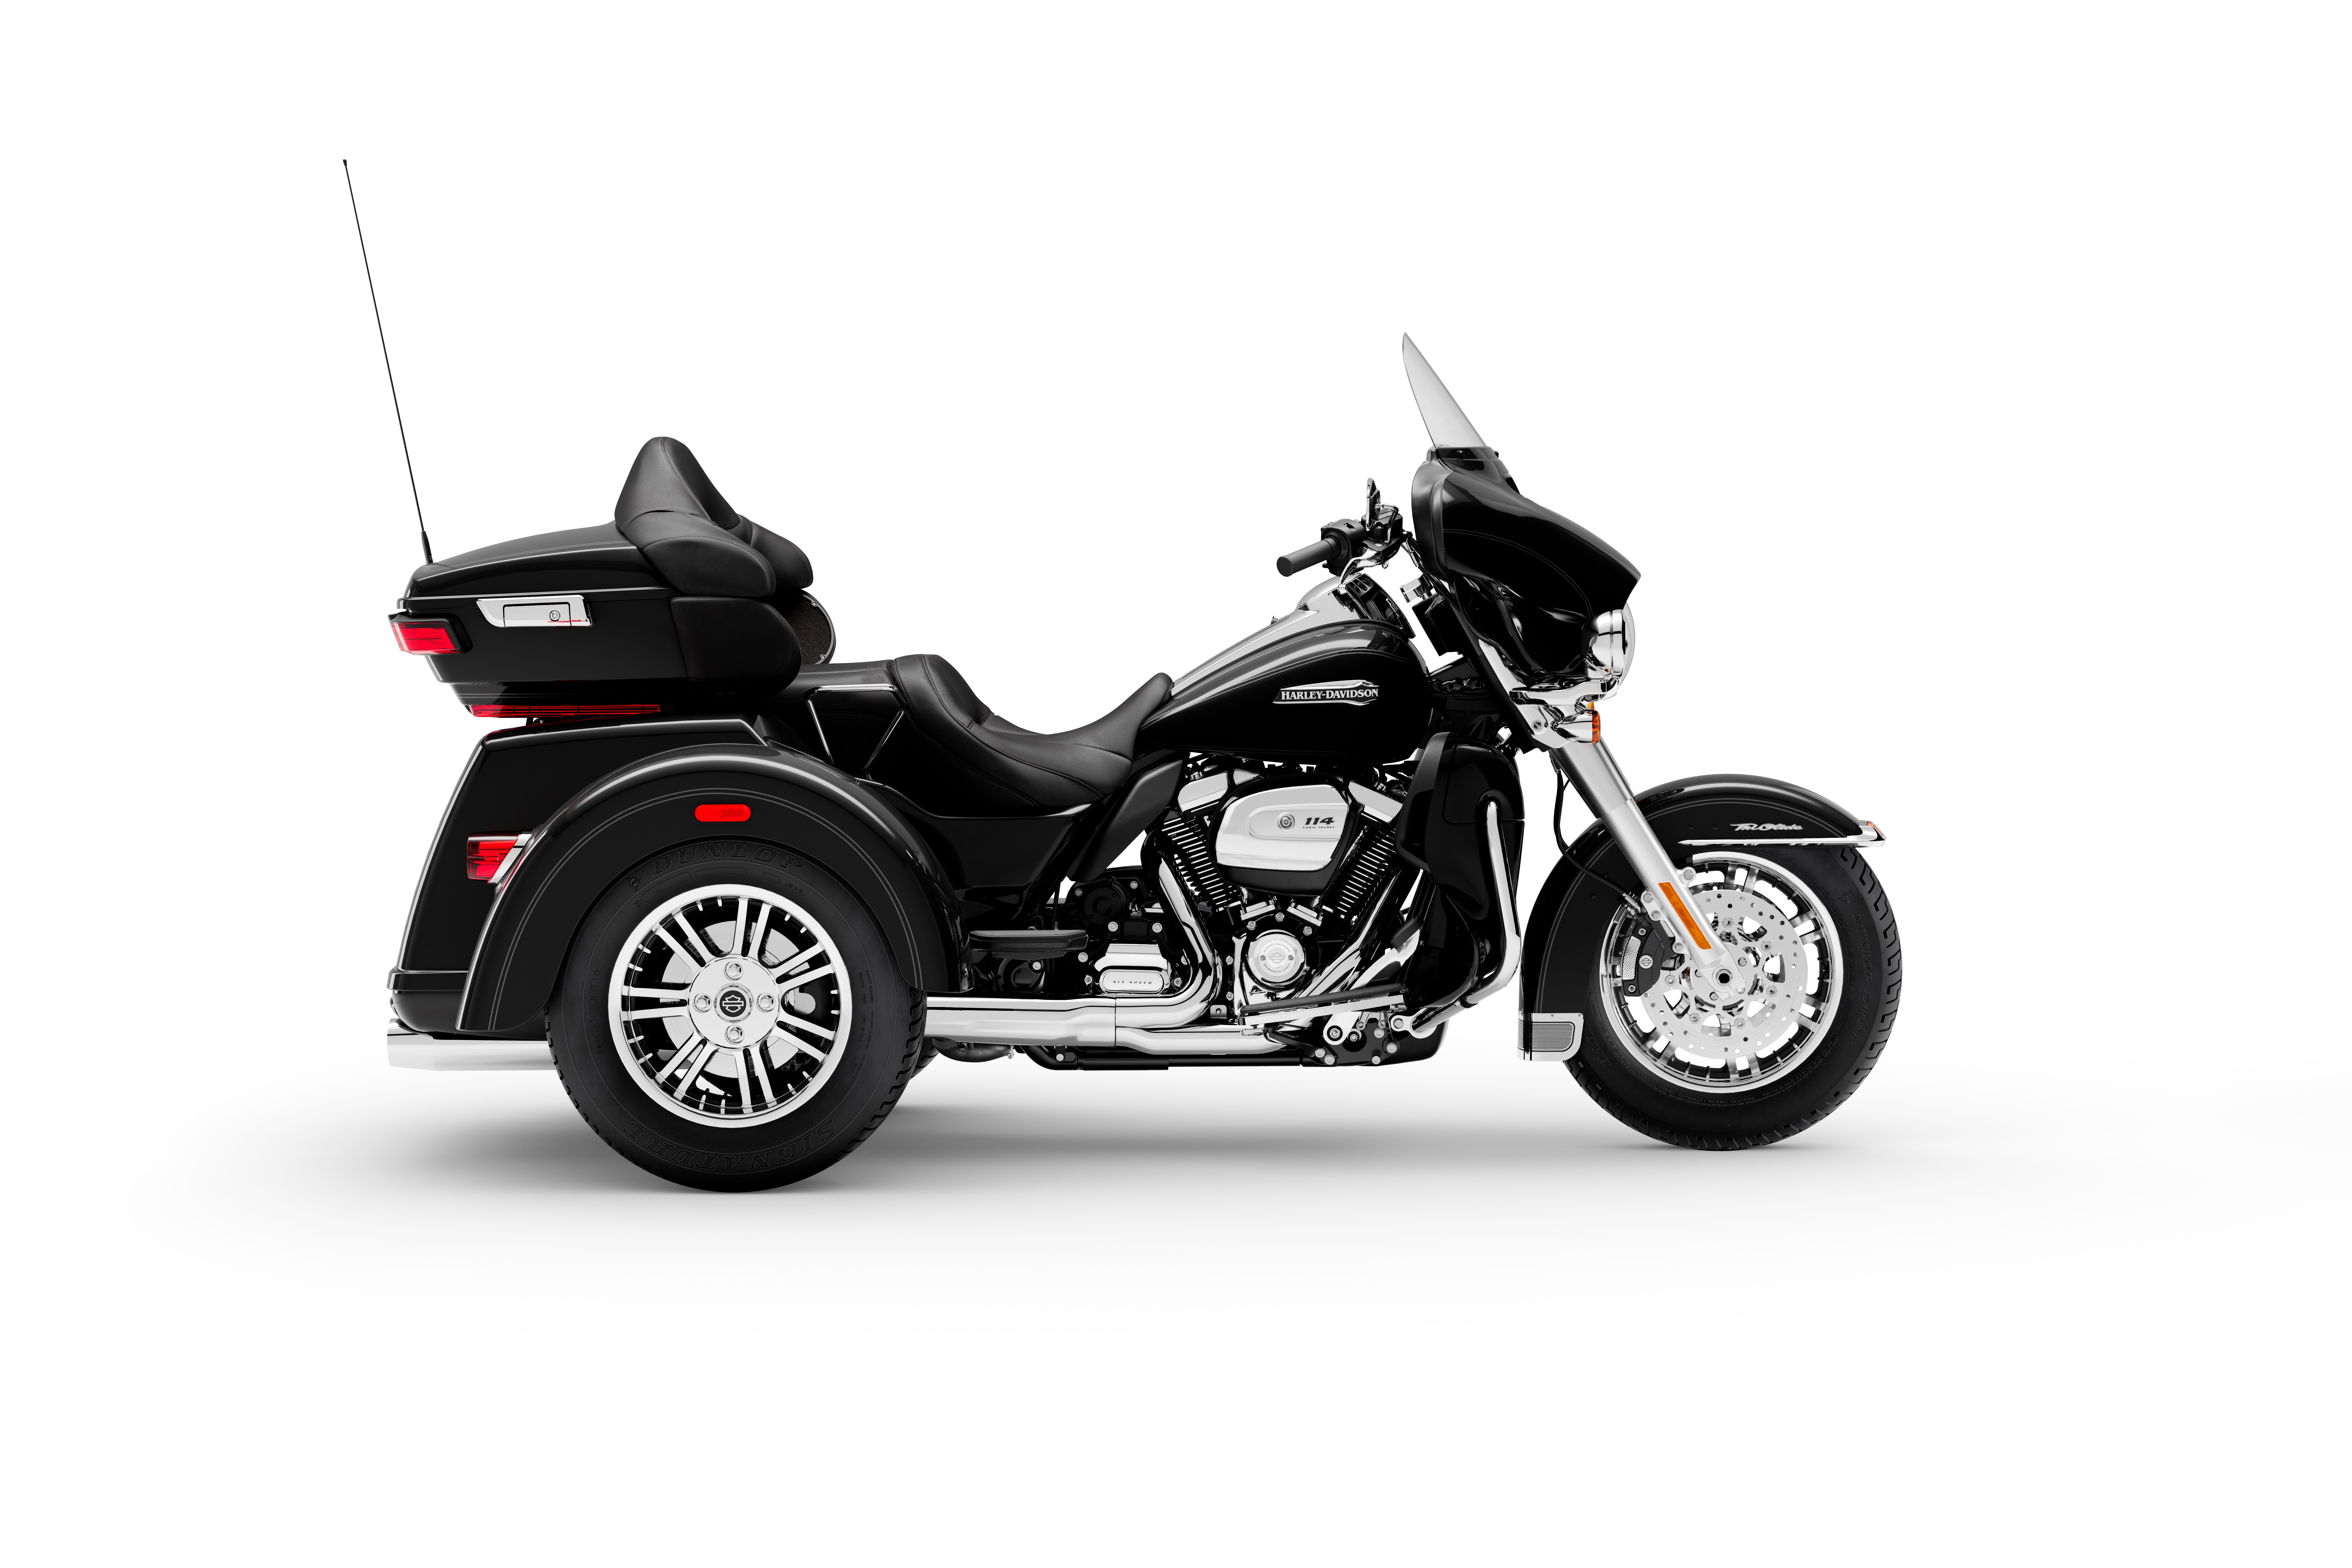 2021 Harley-Davidson Tri-Glide [61]